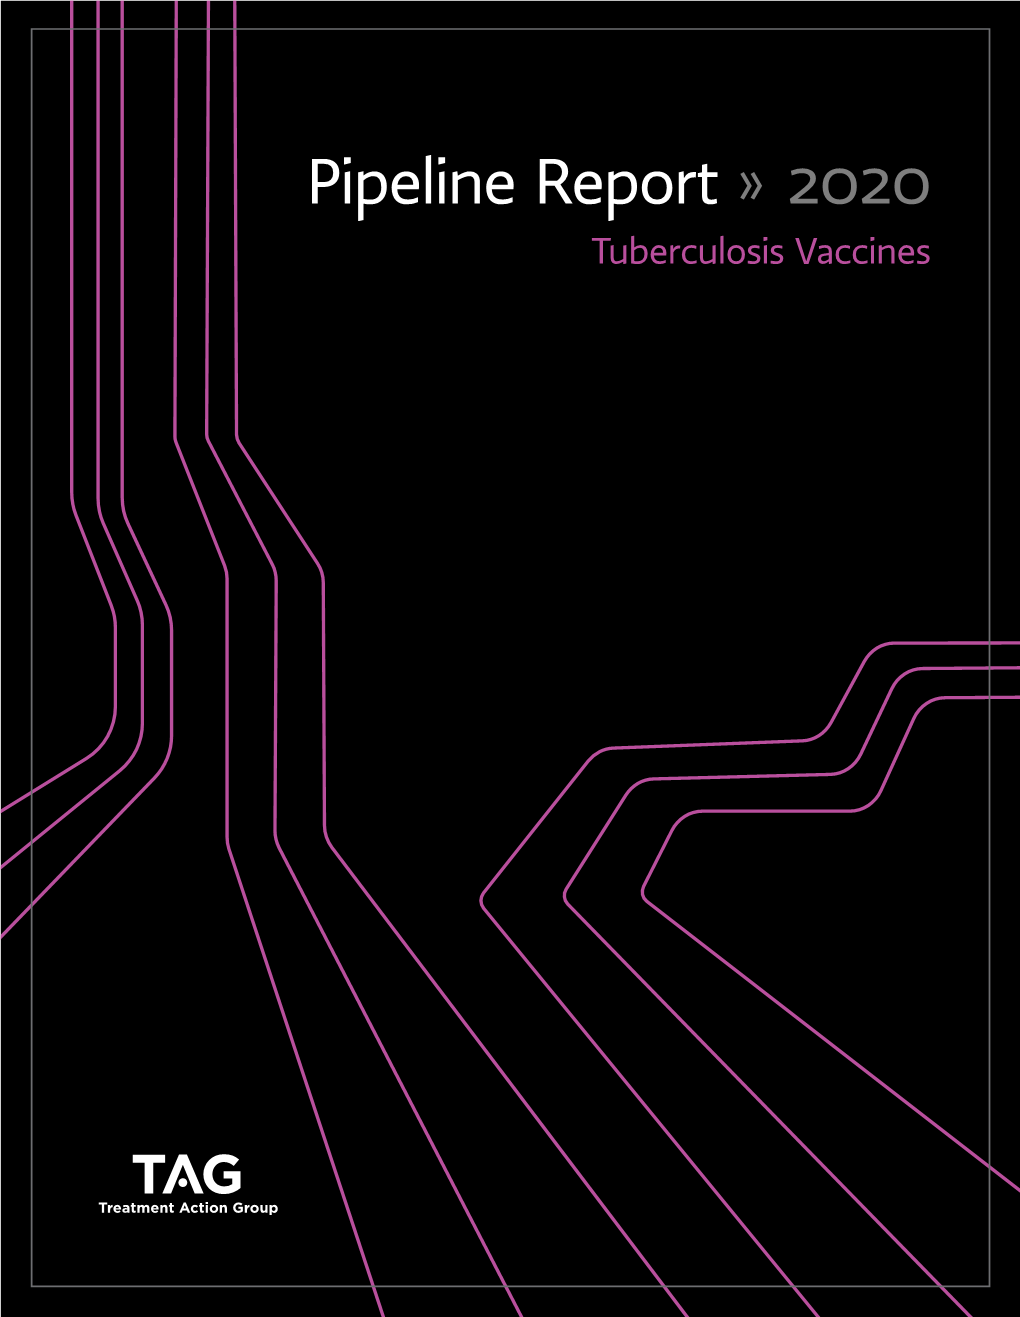 Pipeline Report » 2020 Tuberculosis Vaccines PIPELINE REPORT 2020